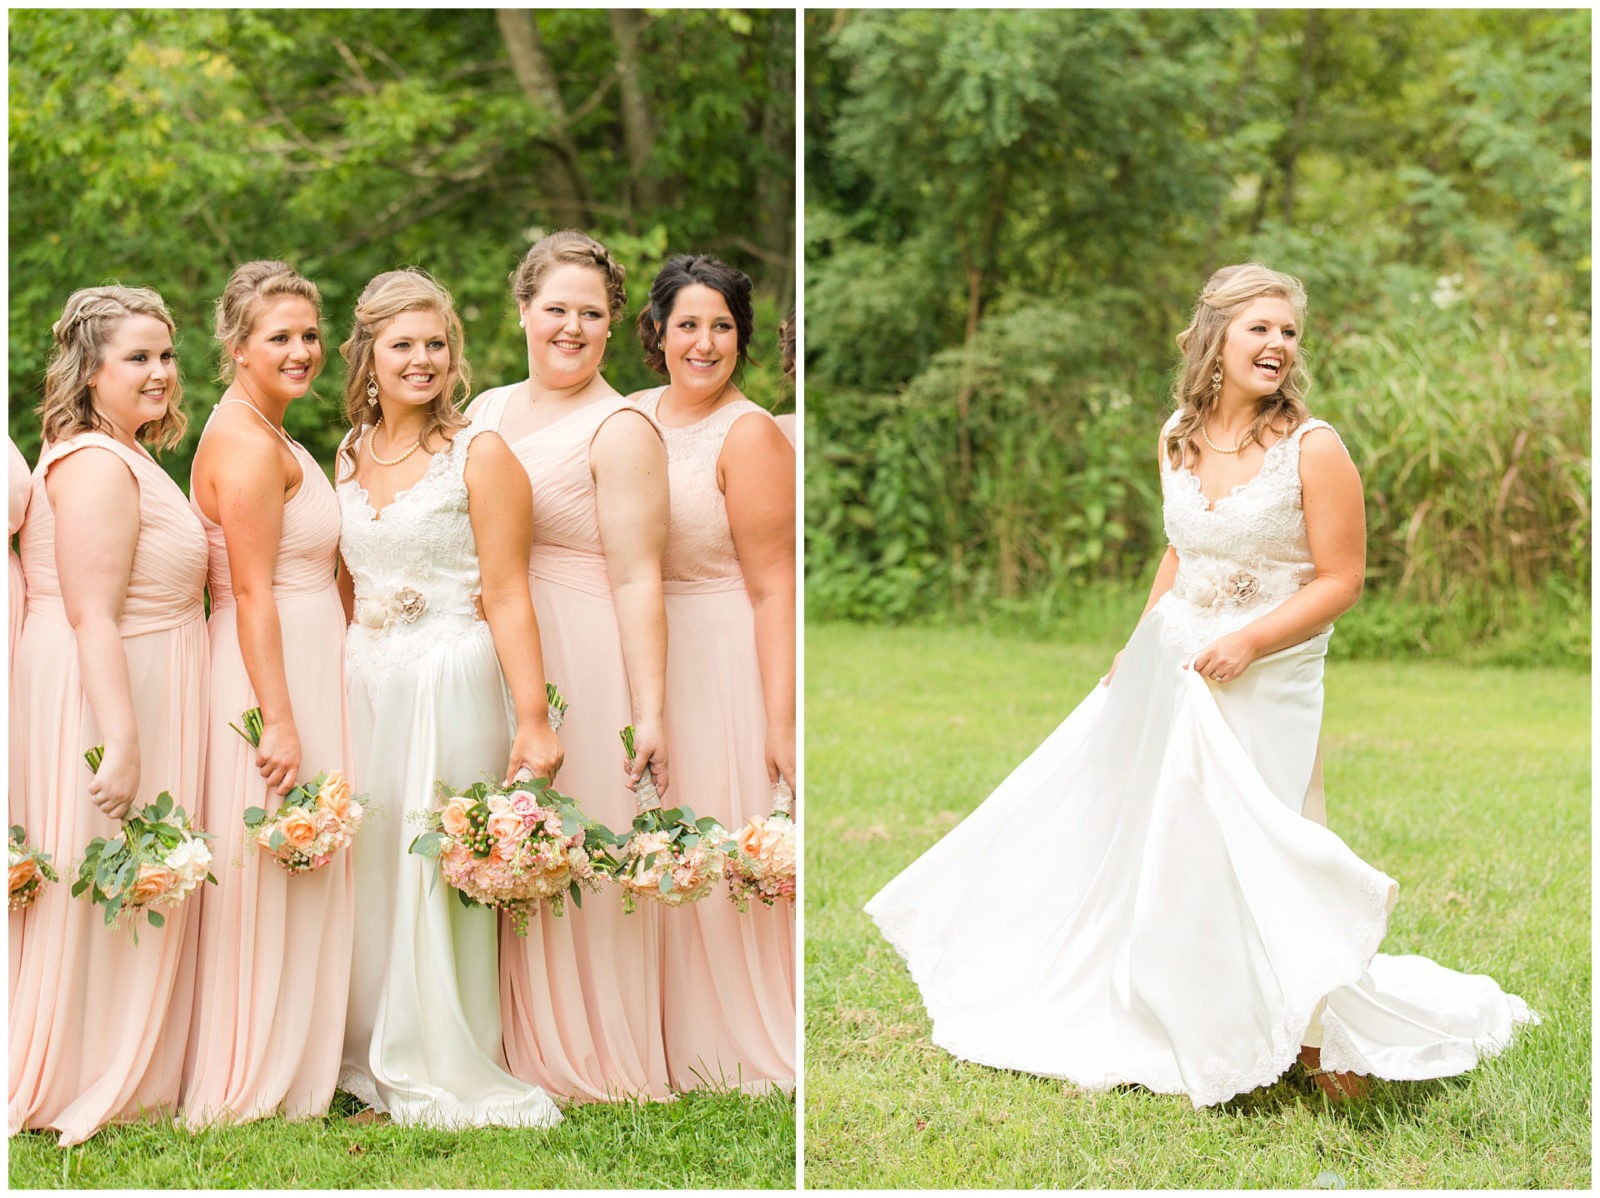 Wedding Bridesmaid Photos at the Barn at McCall Springs in Lawrenceburg, Kentucky.